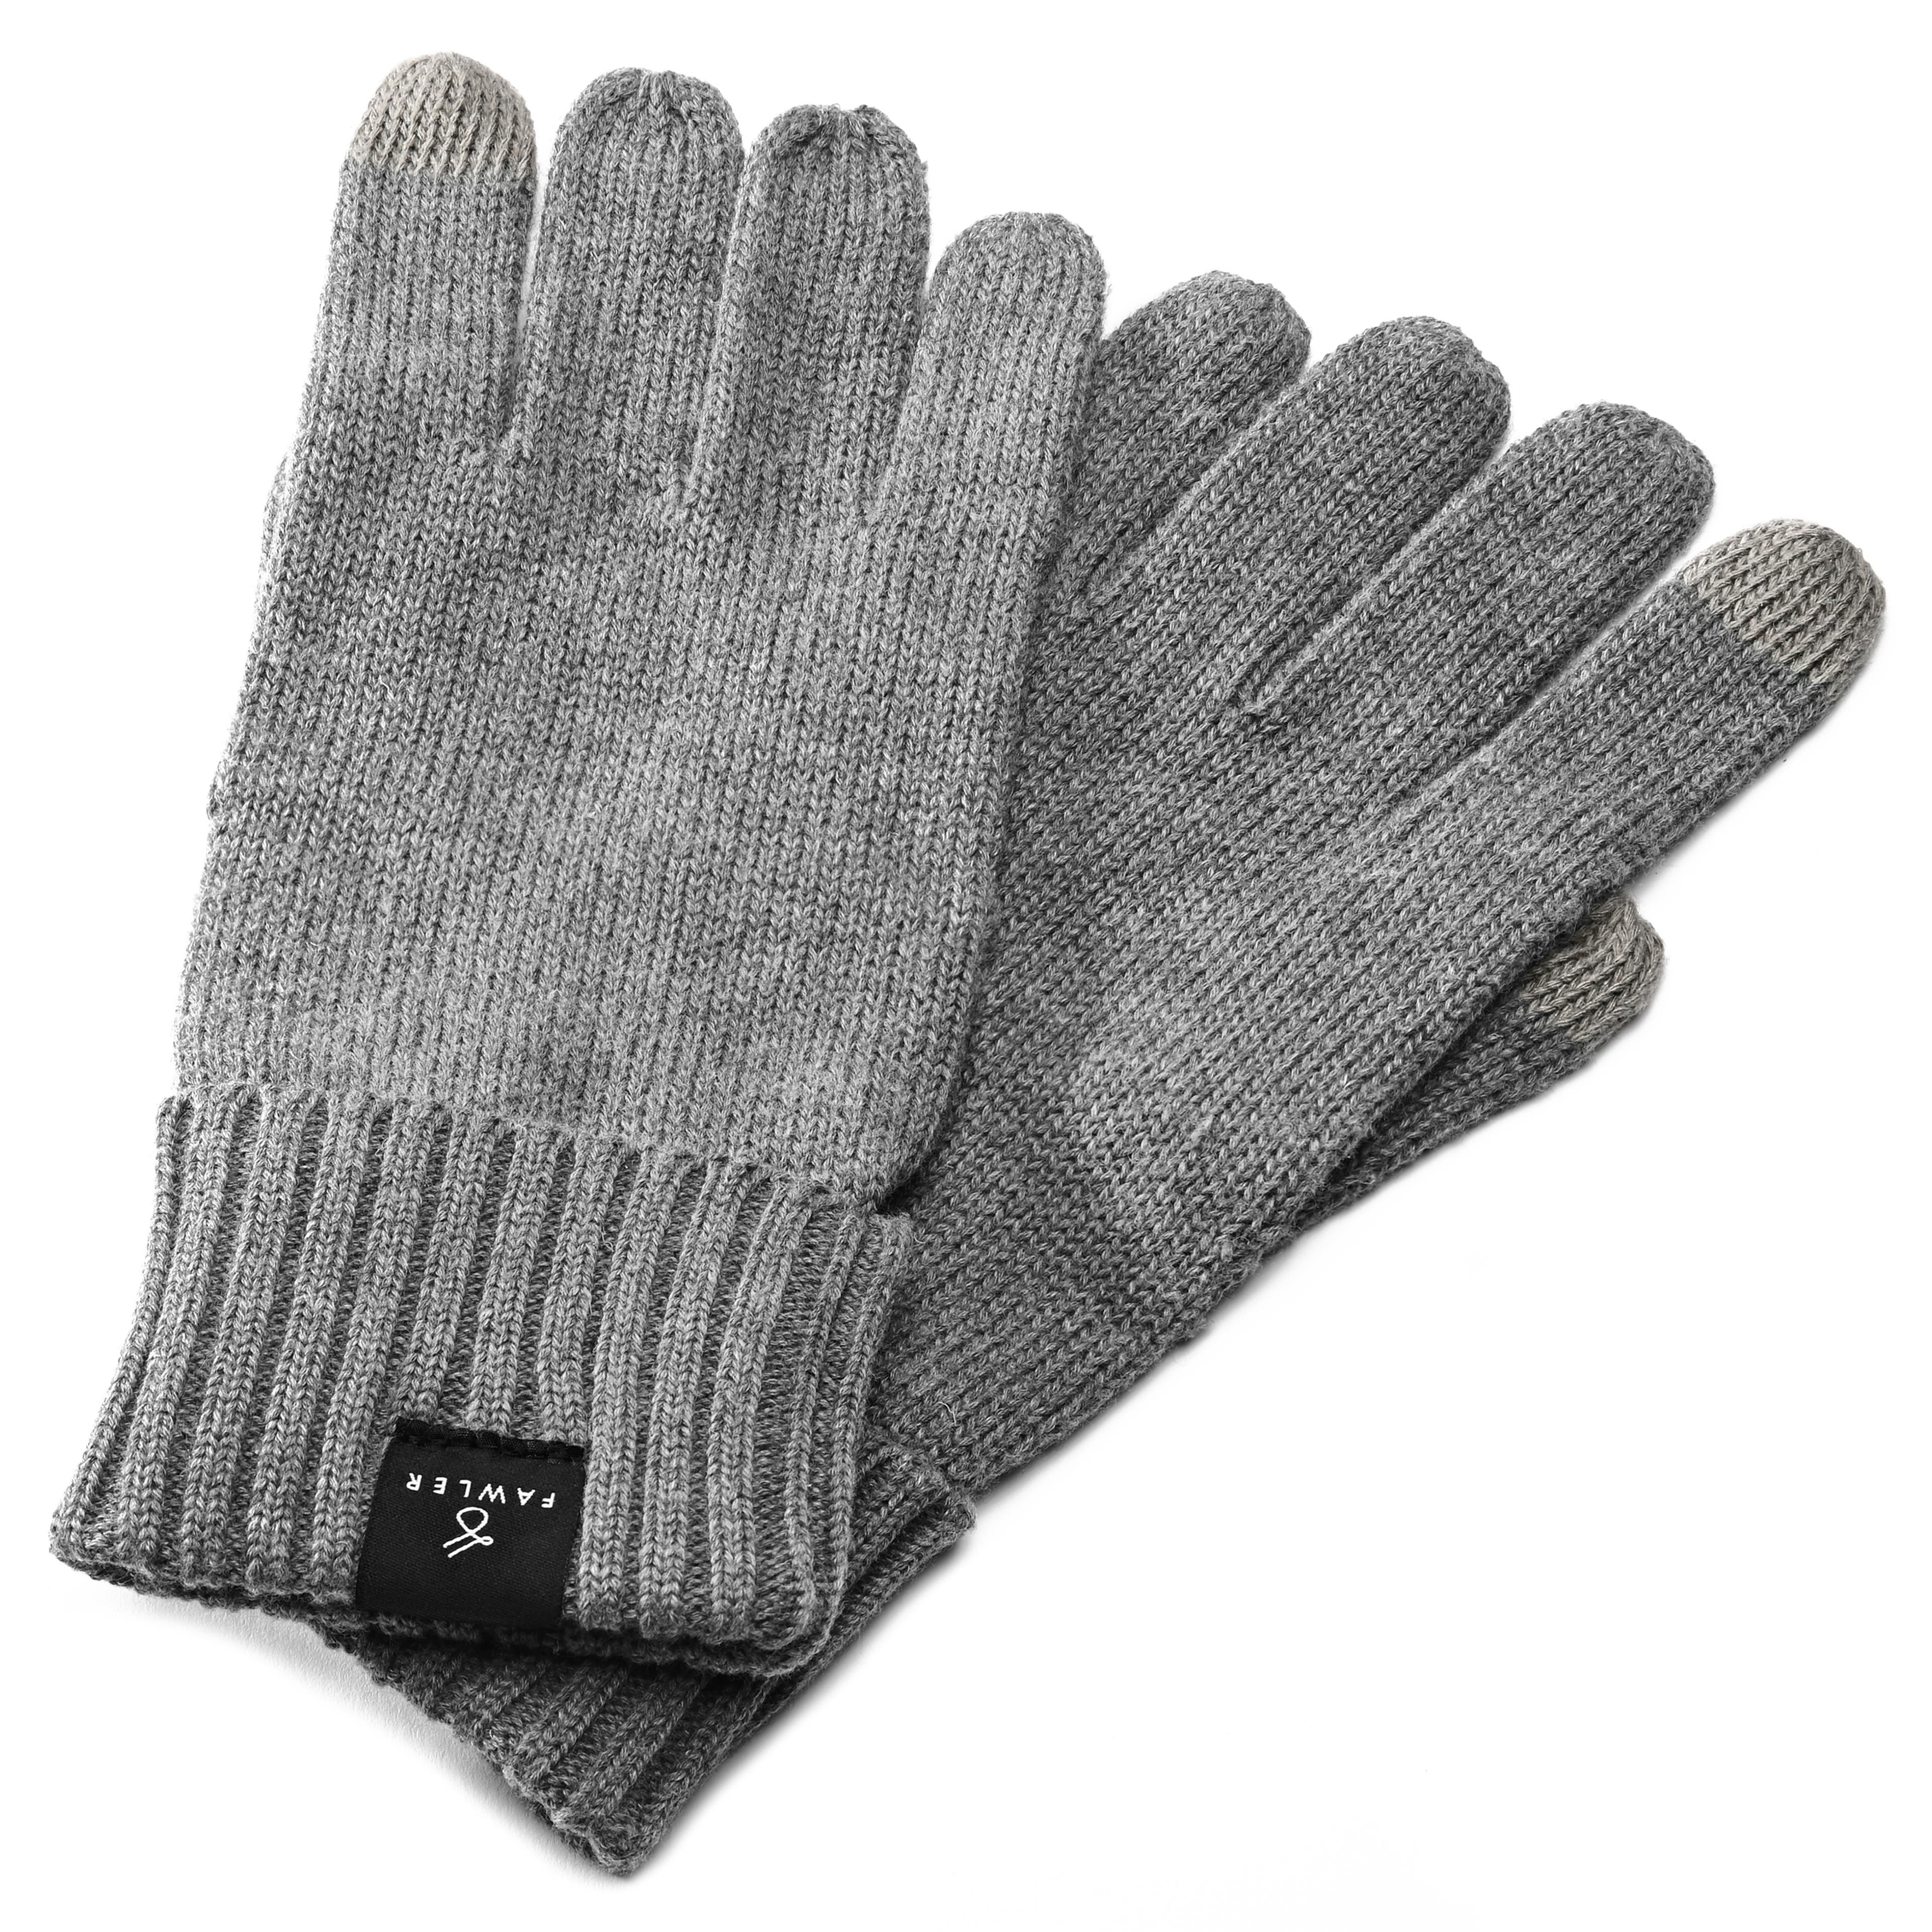 stock! Fawler In Gloves | Grey Knitted Dark Cotton |